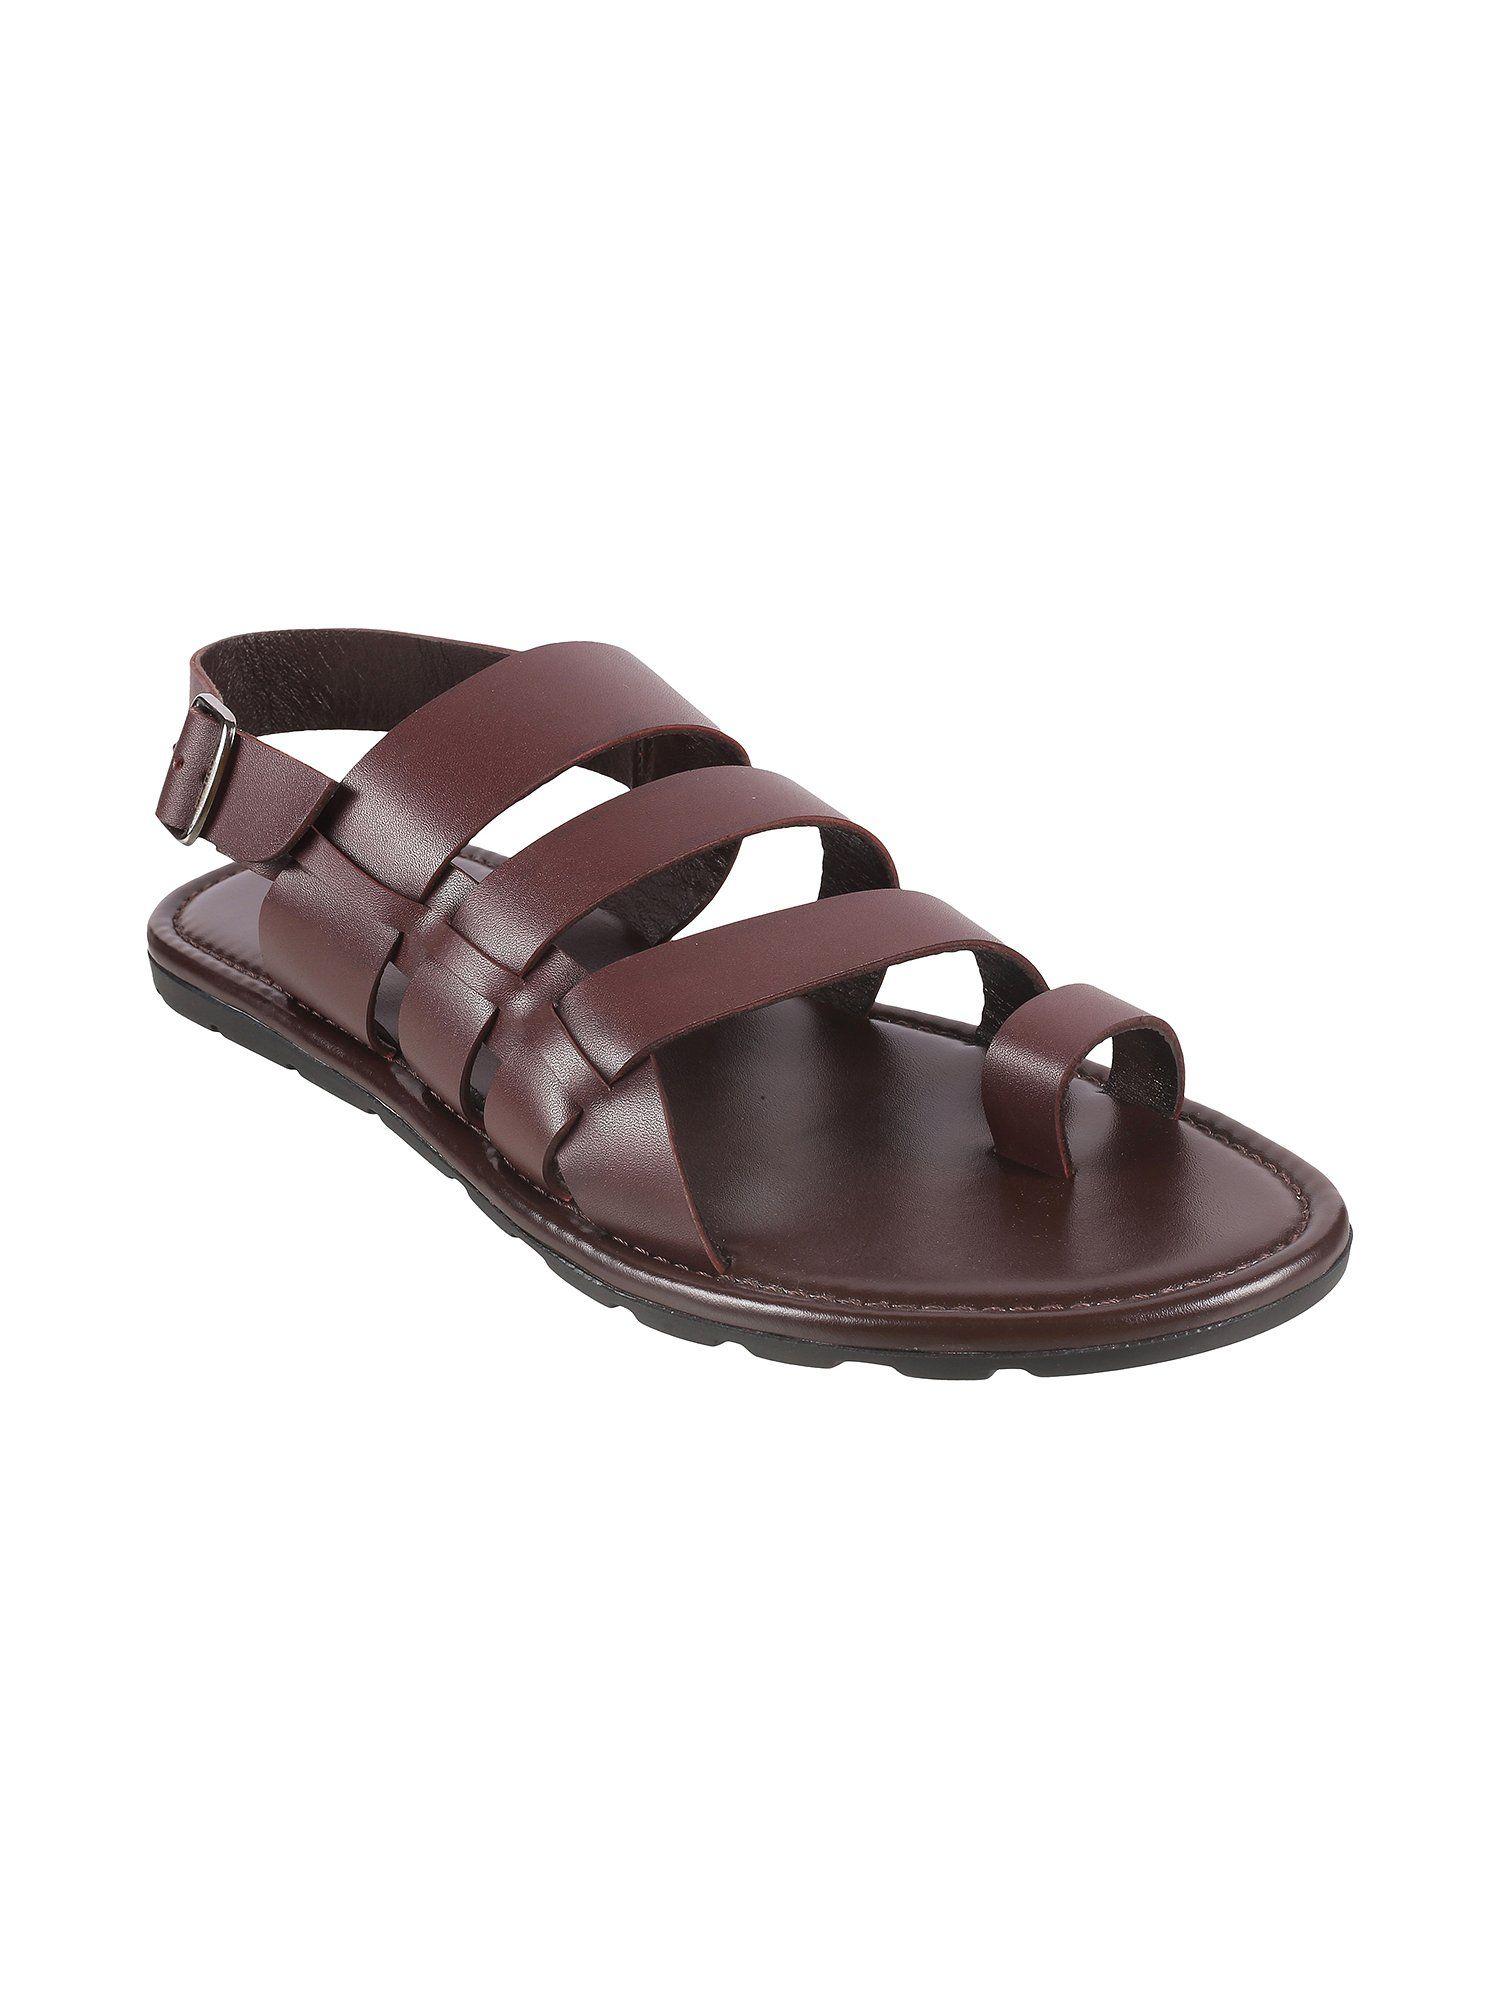 plain maroon sandals